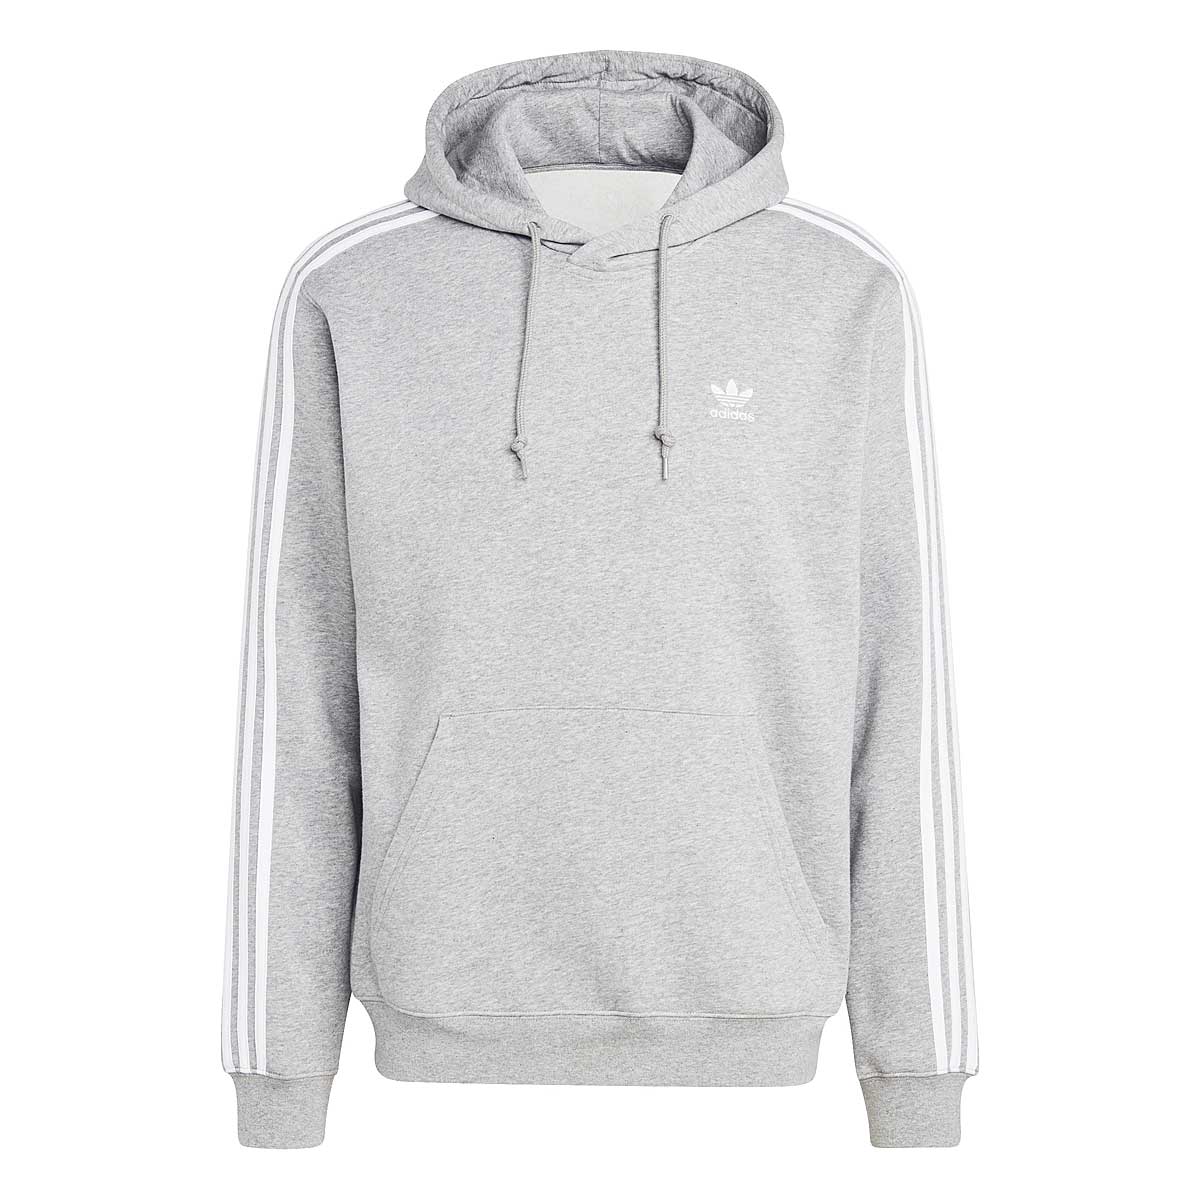 Image of Adidas 3-stripes Hoody, Grey